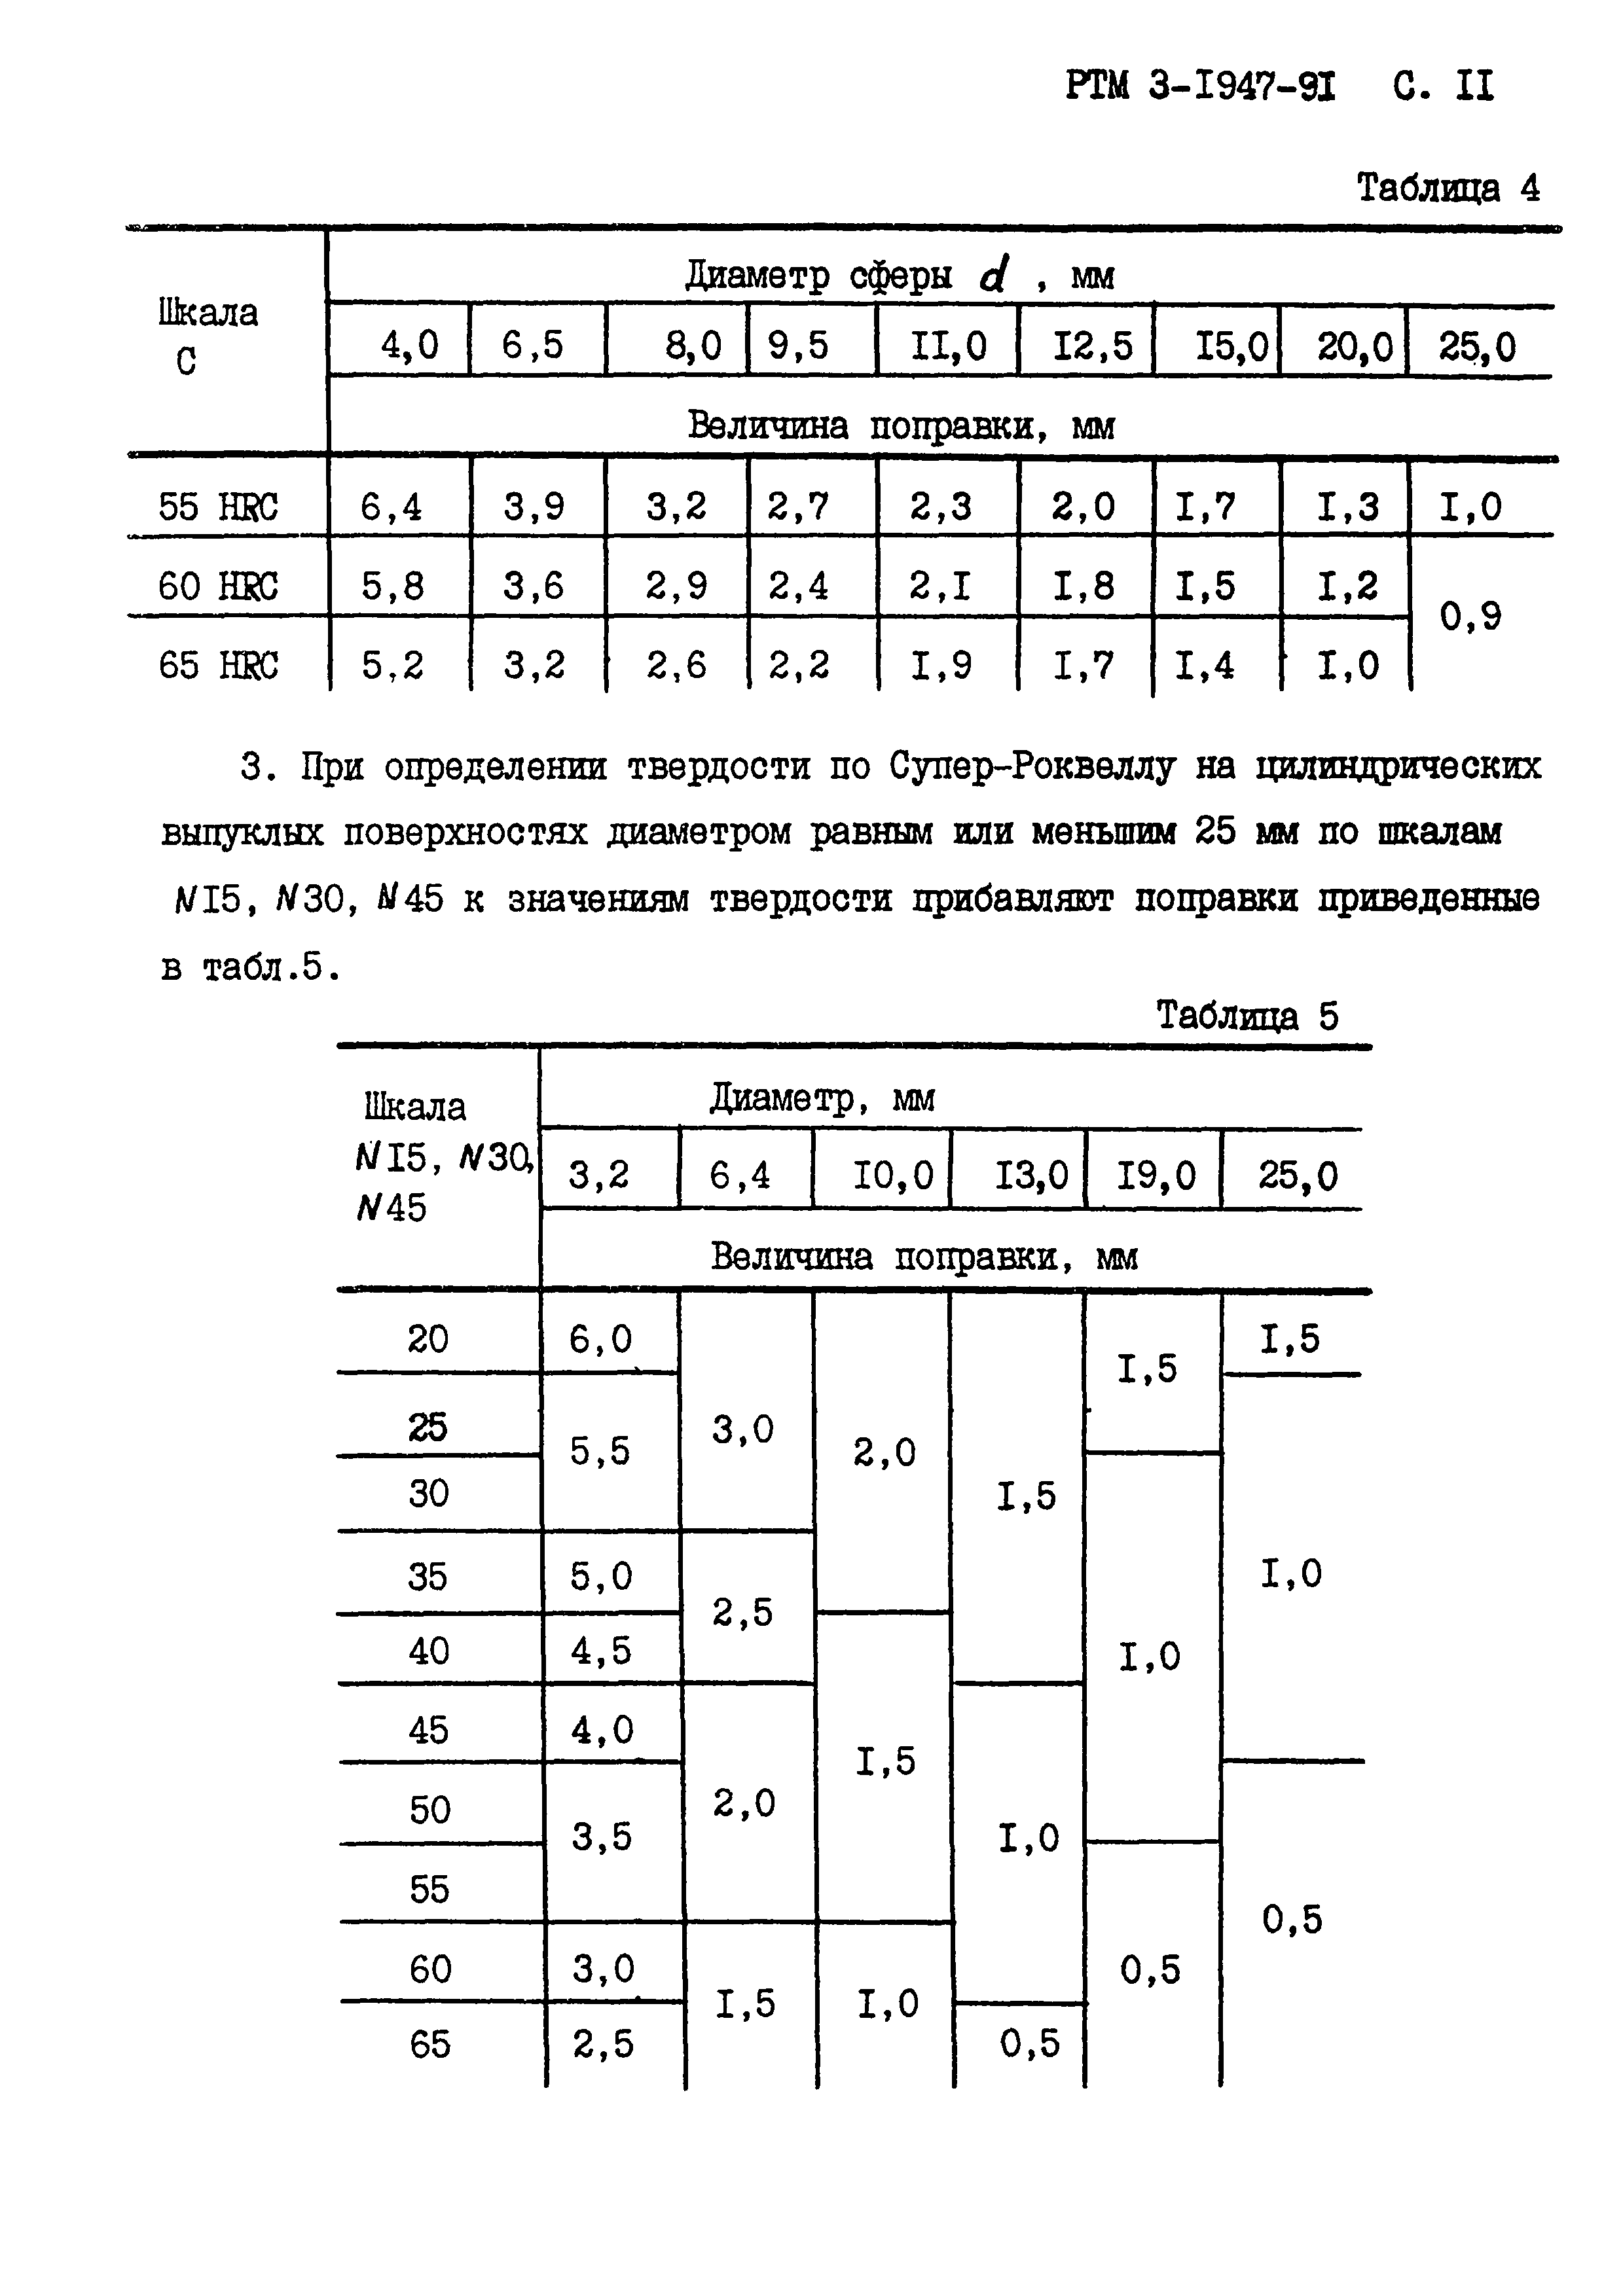 РТМ 3-1947-91